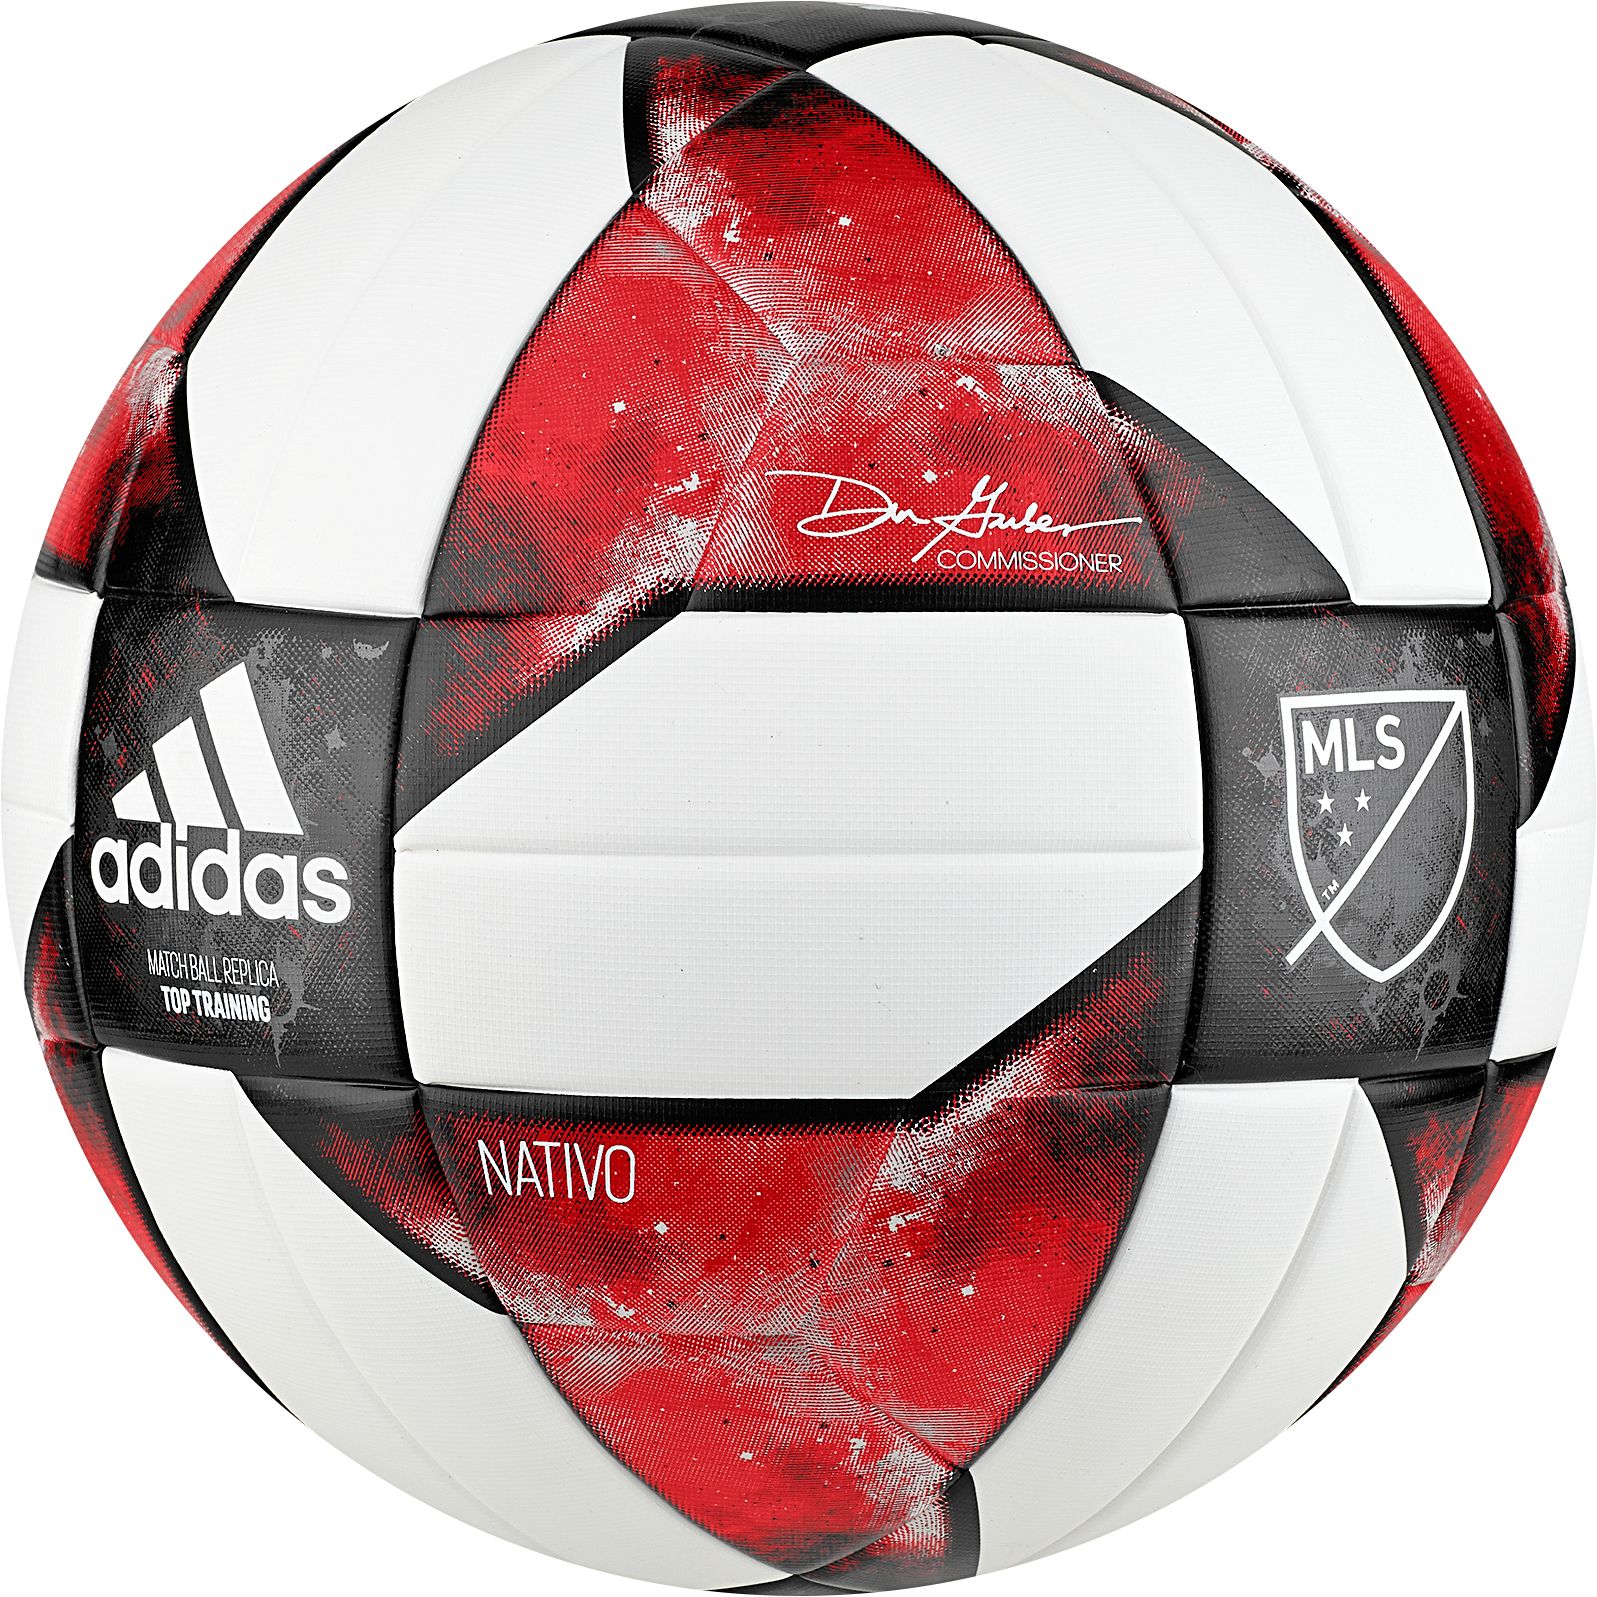 adidas top training soccer ball